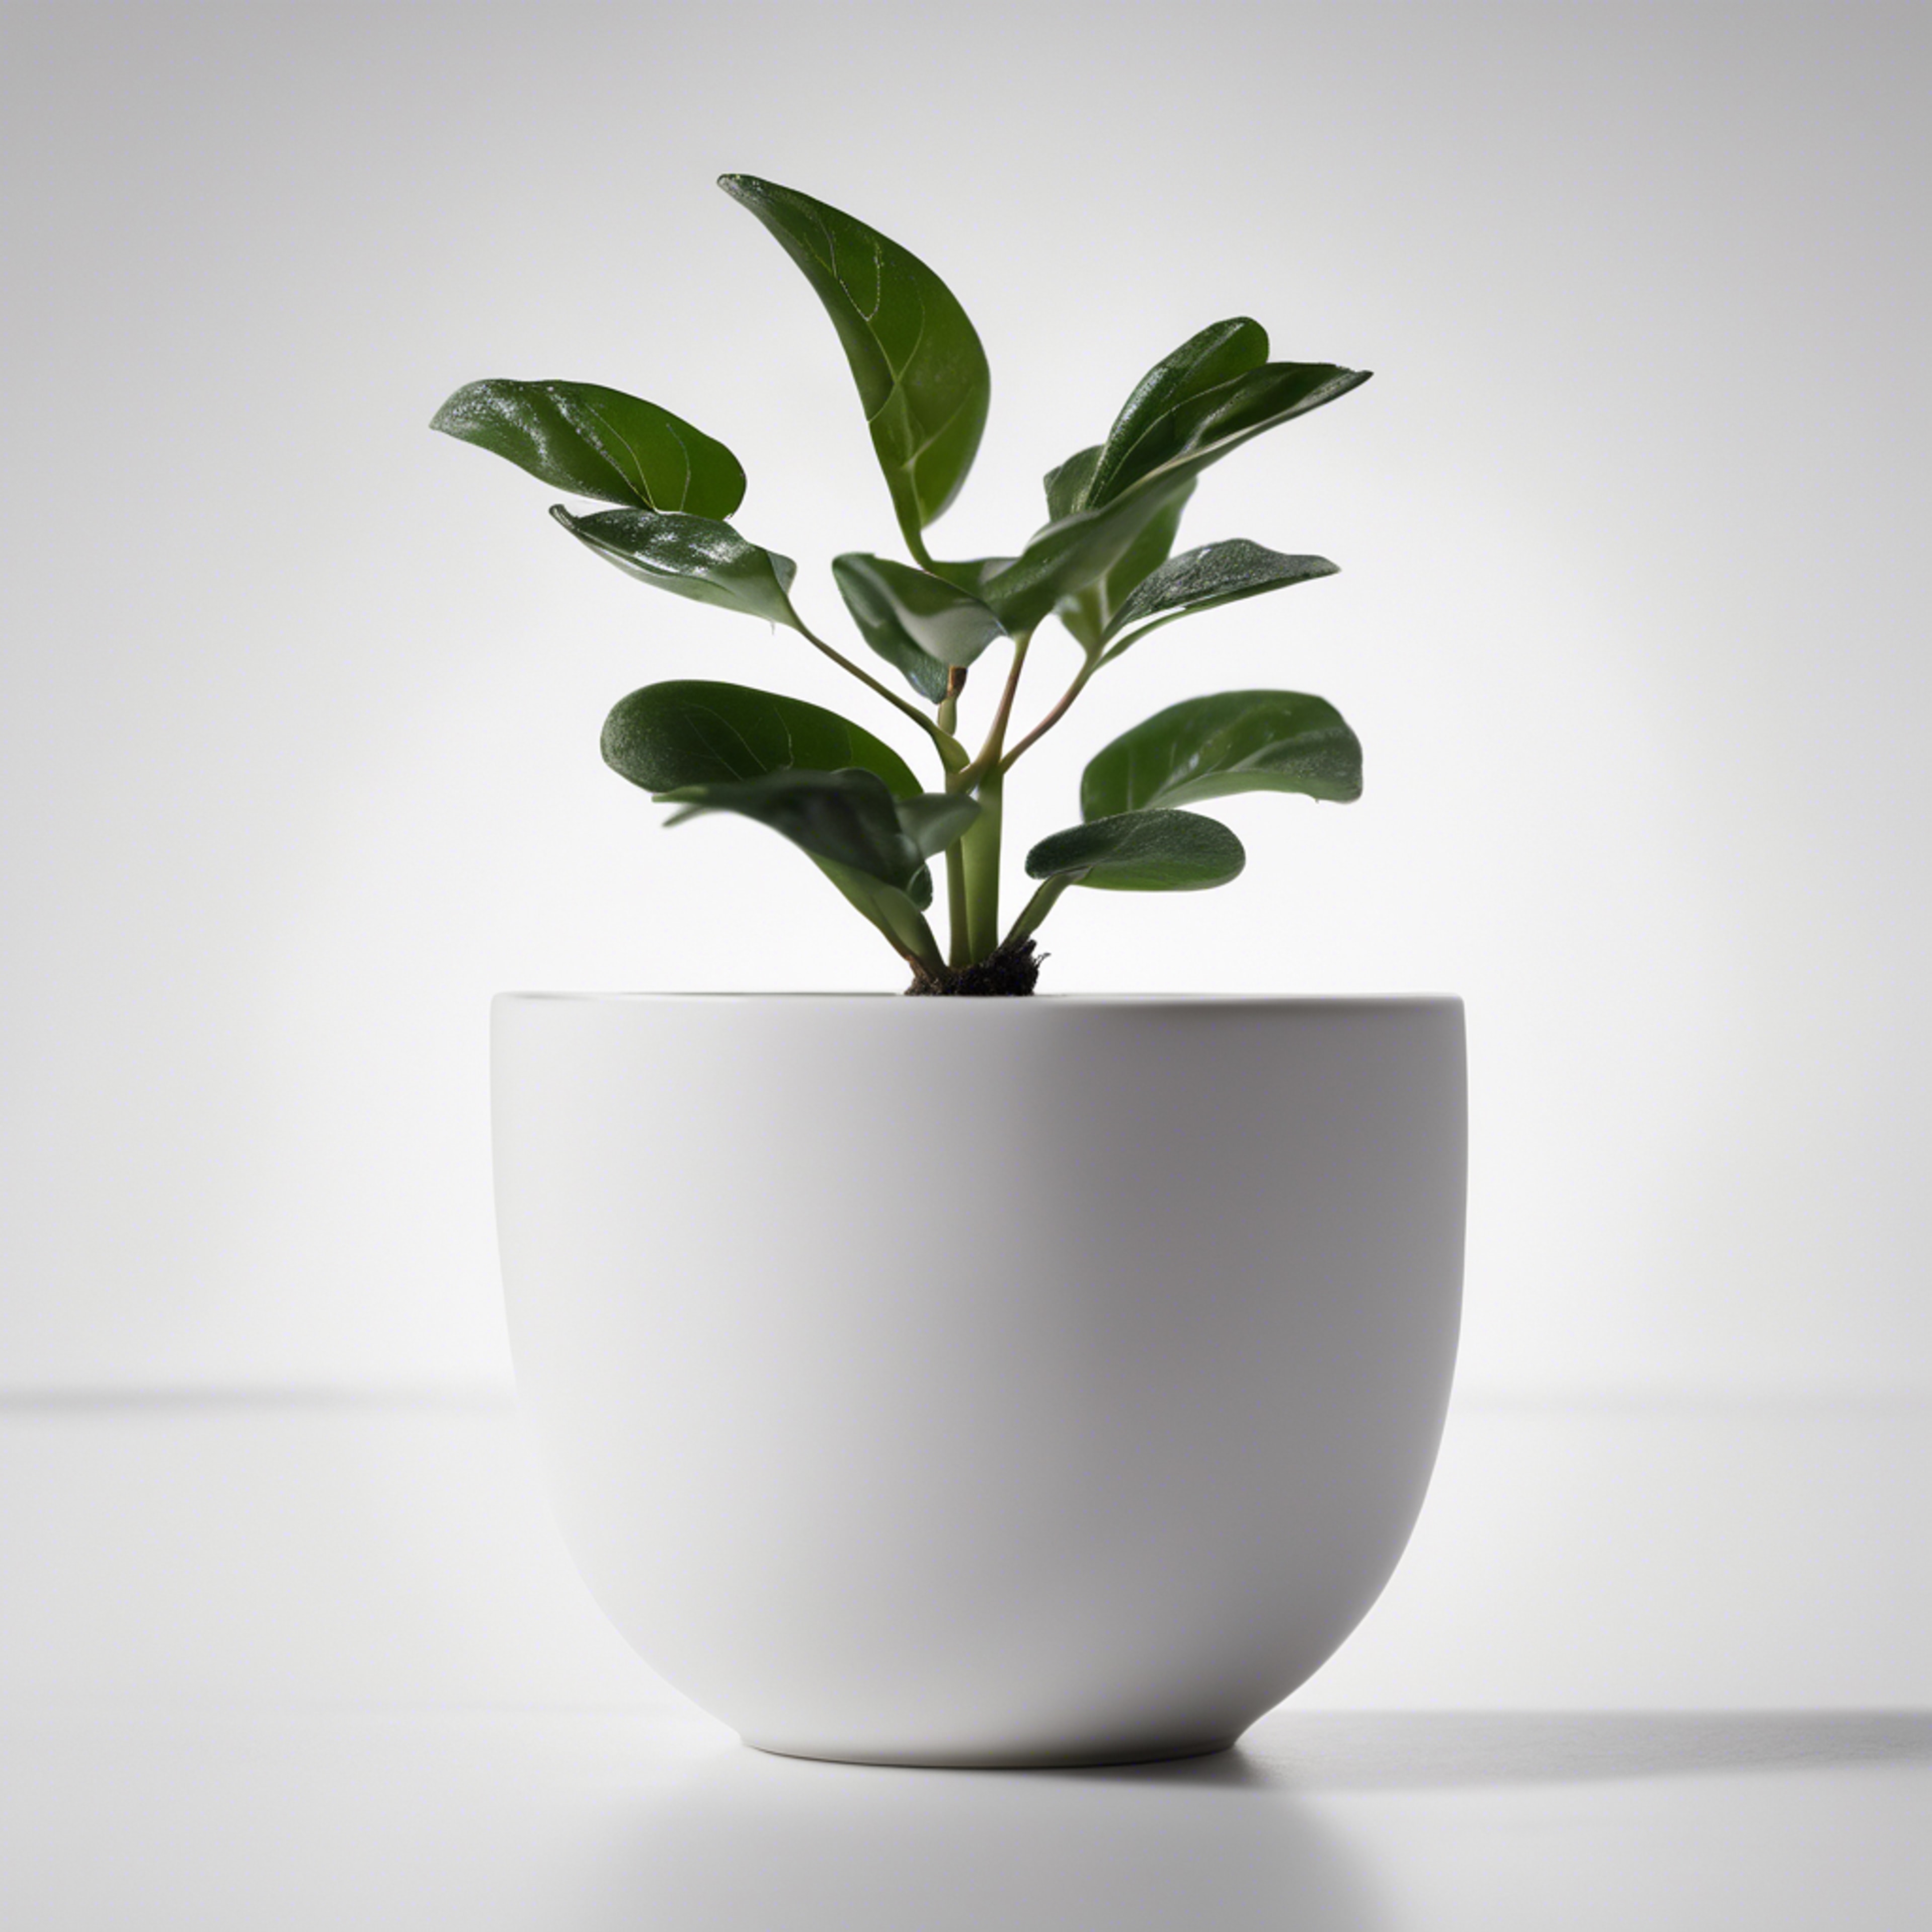 Small plant in a simple white ceramic pot against a minimalist white backdrop. Tapeta[a9b2ed4c340742d2b1fd]